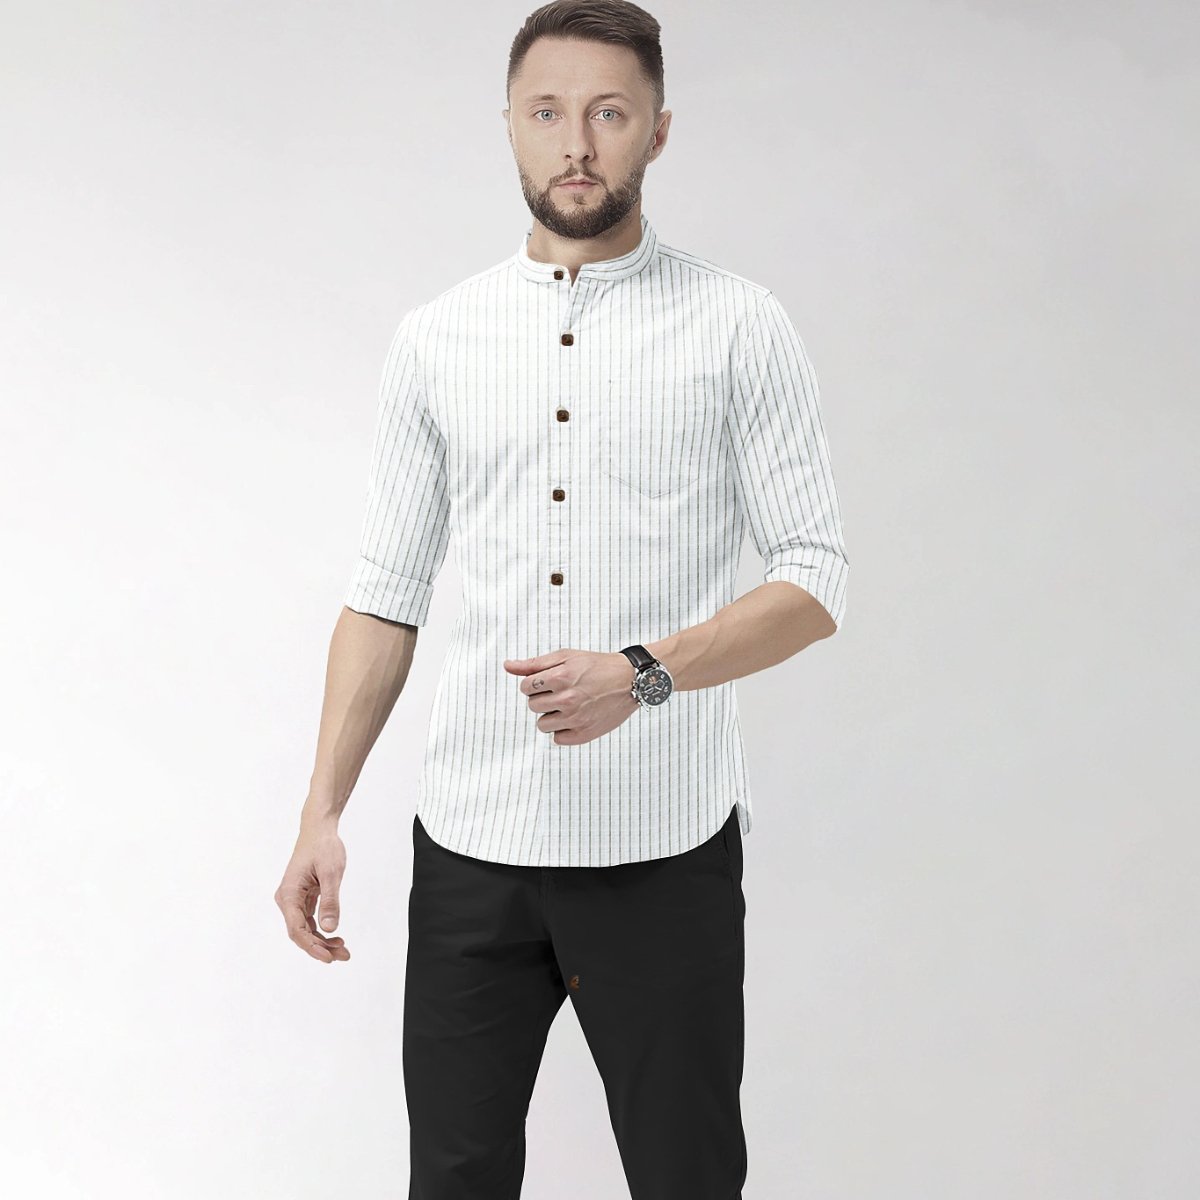 Hemploom - Minimalist Pure Hemp Shirt in Stripes - 983 - CBD Store India